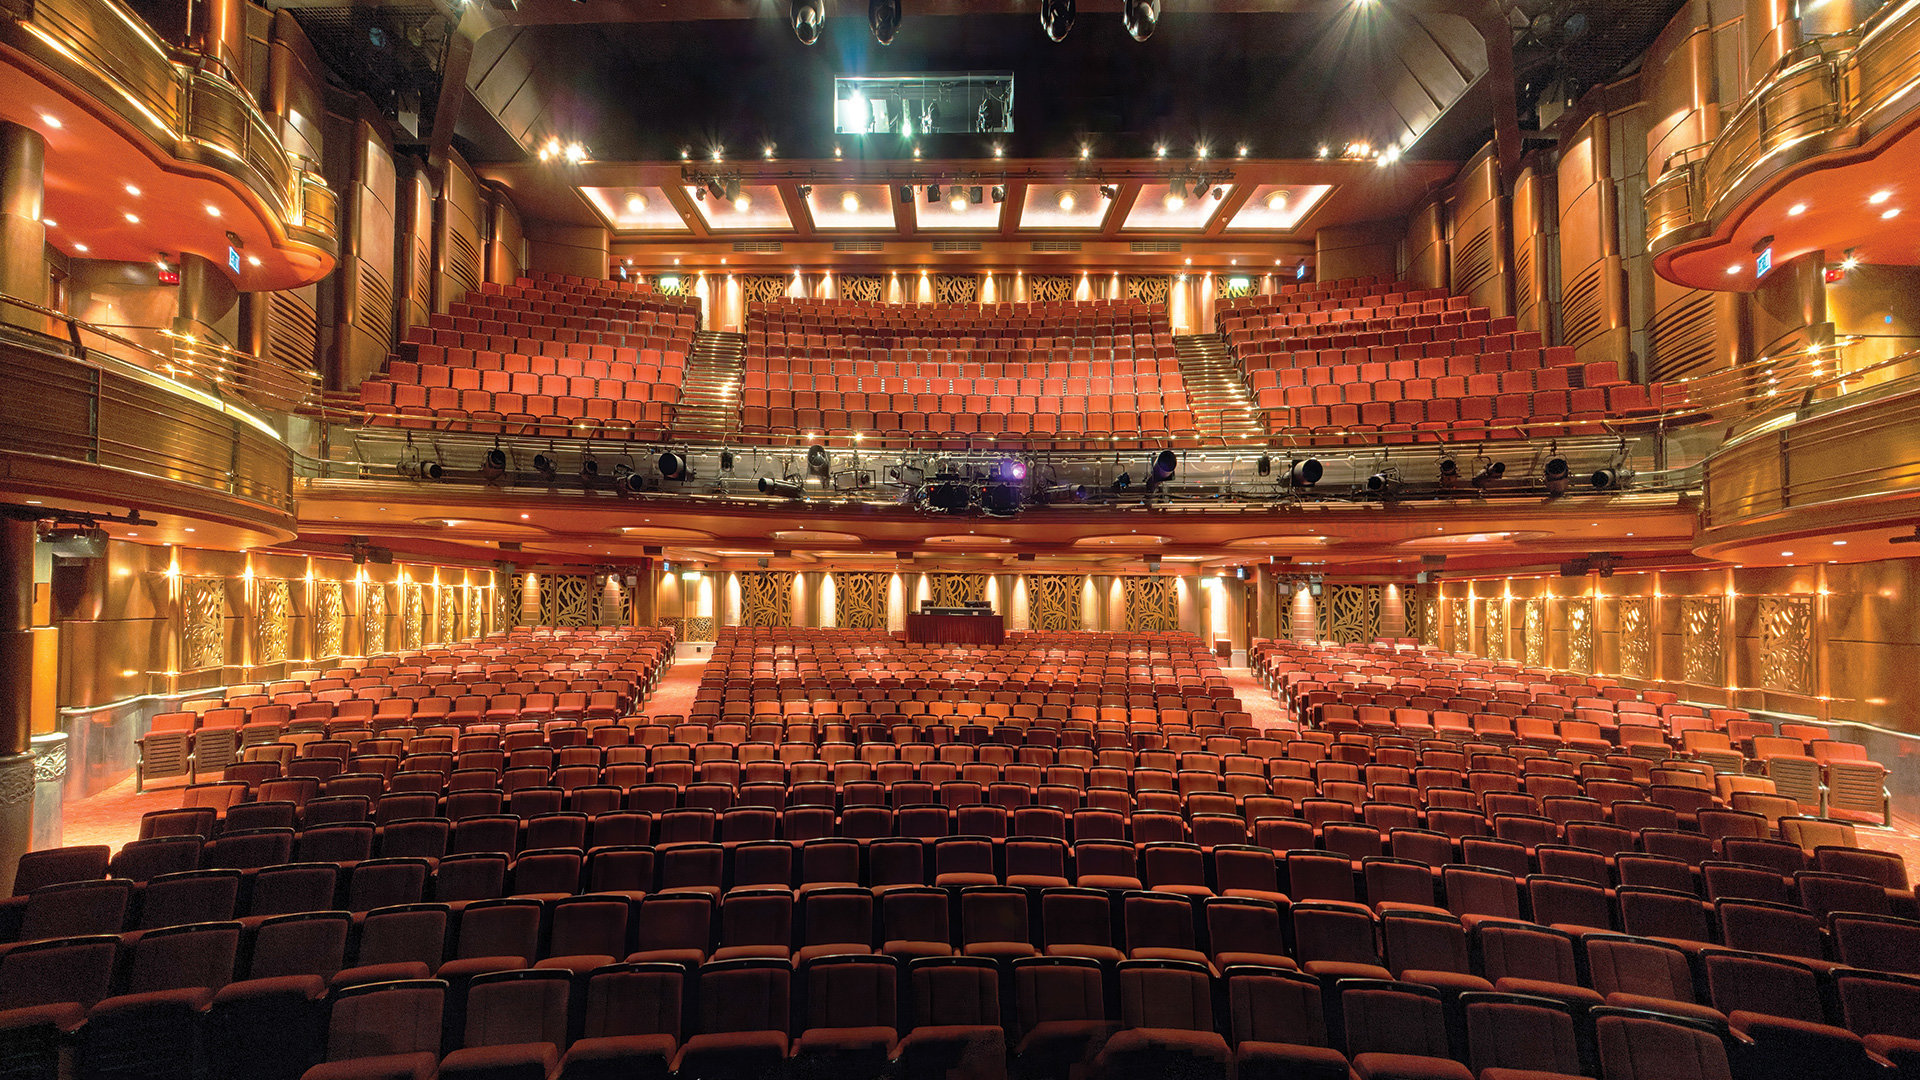 Prince of Wales Theatre London Seating Plan & Seat View Photos SeatPlan